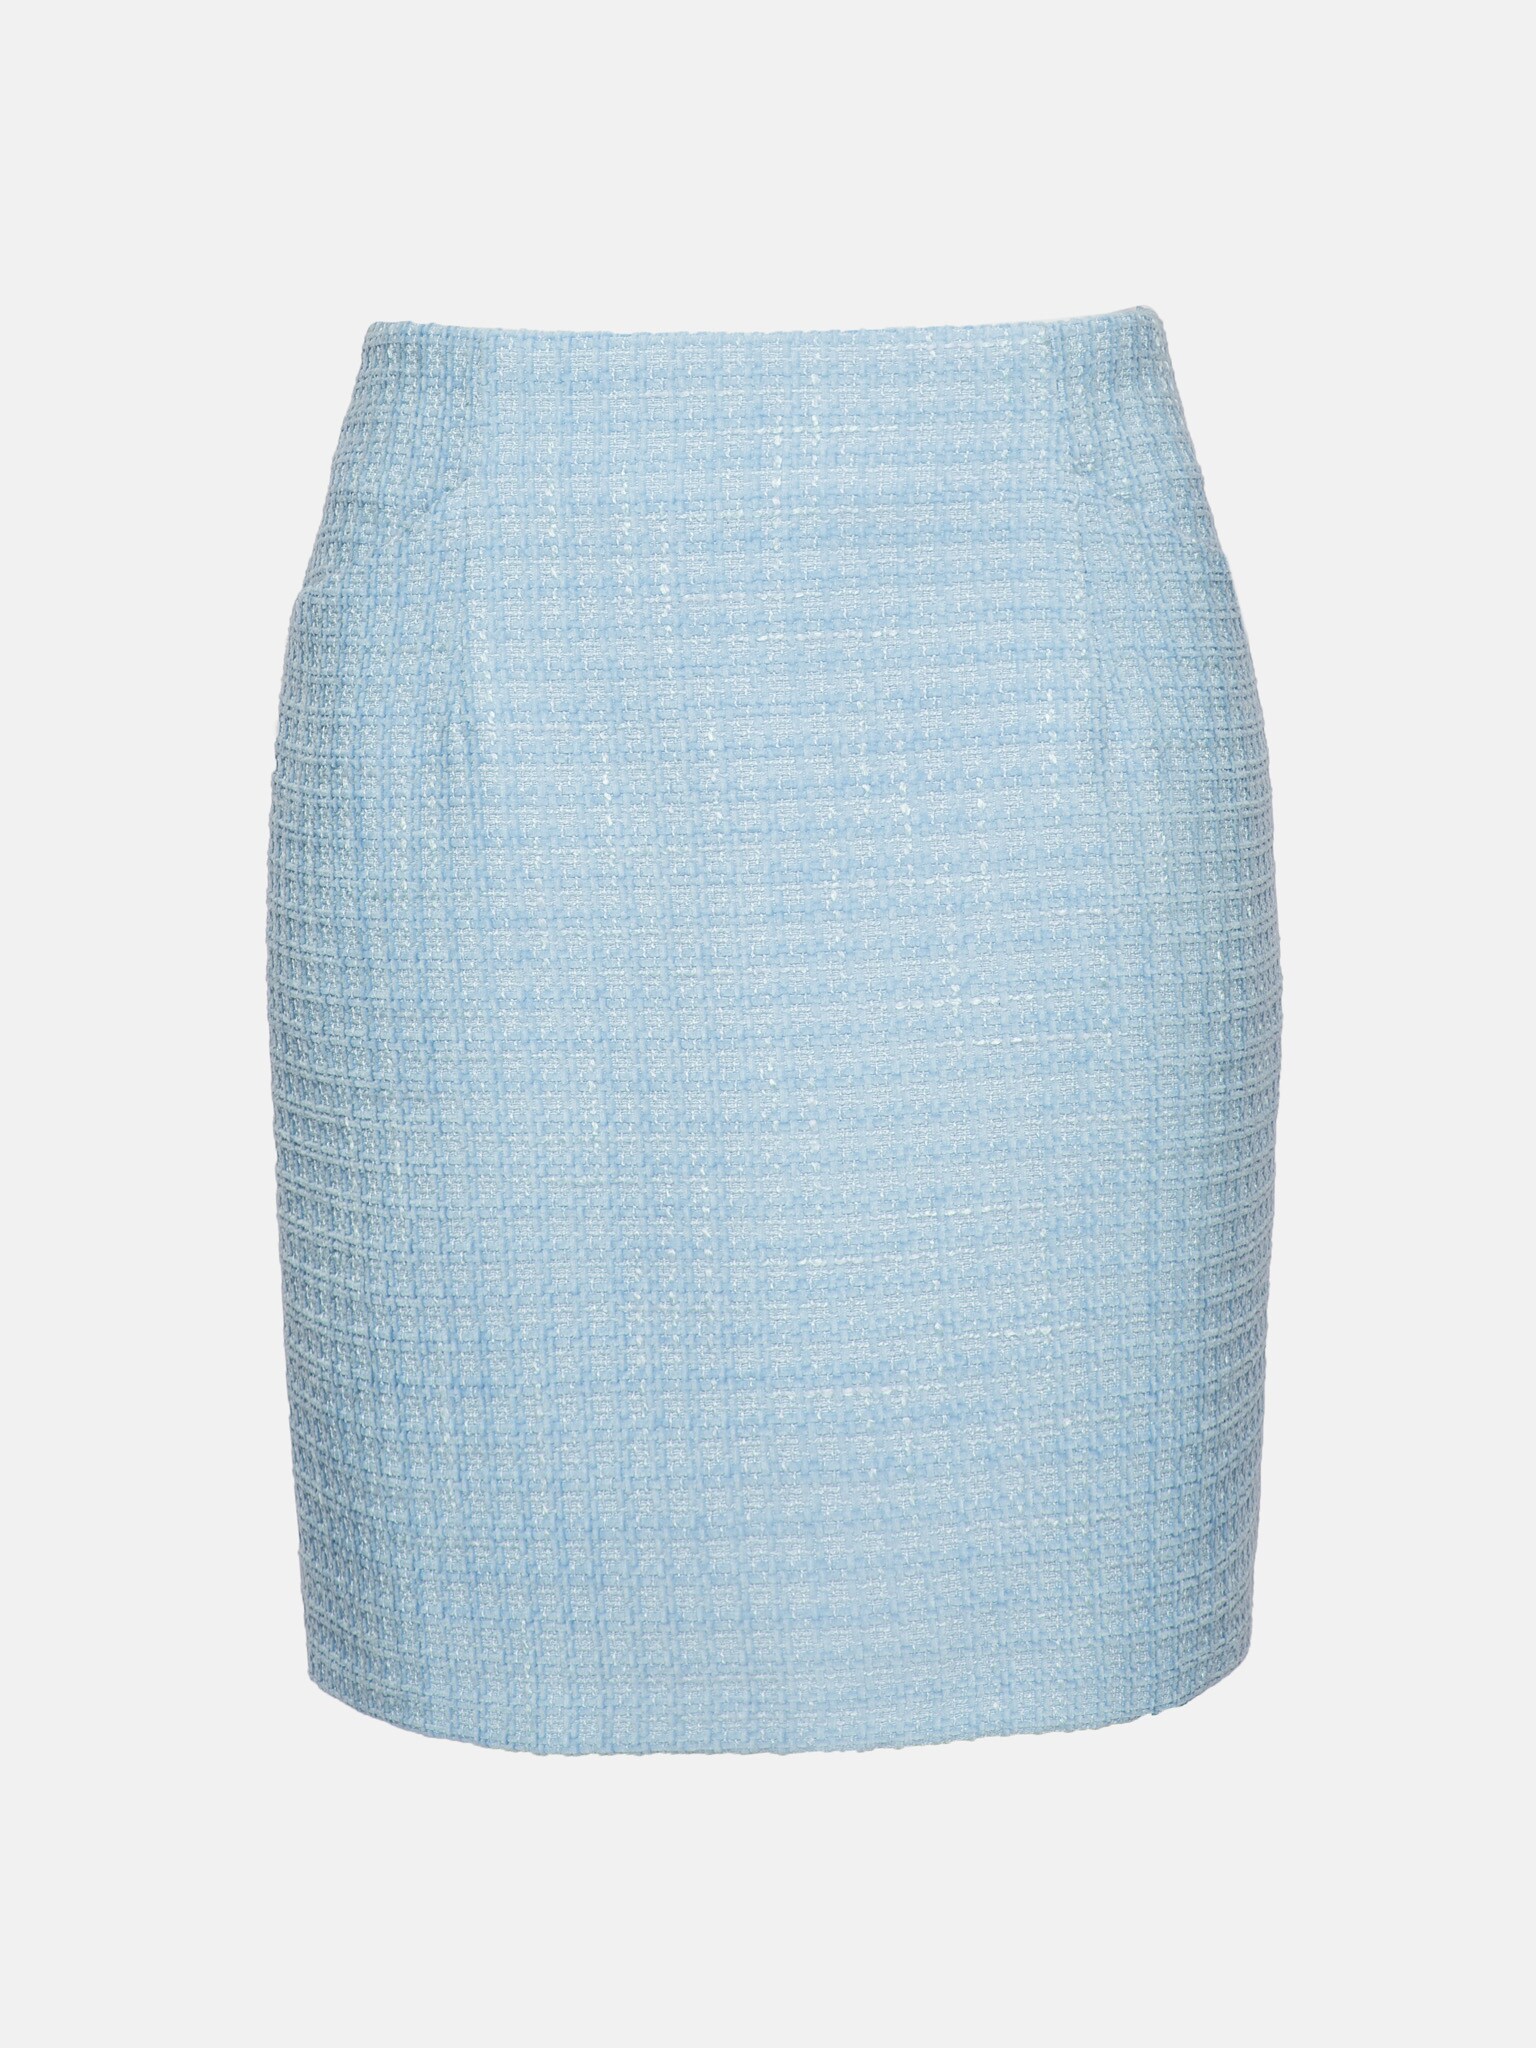 Tweed mini skirt with pockets :: LICHI - Online fashion store